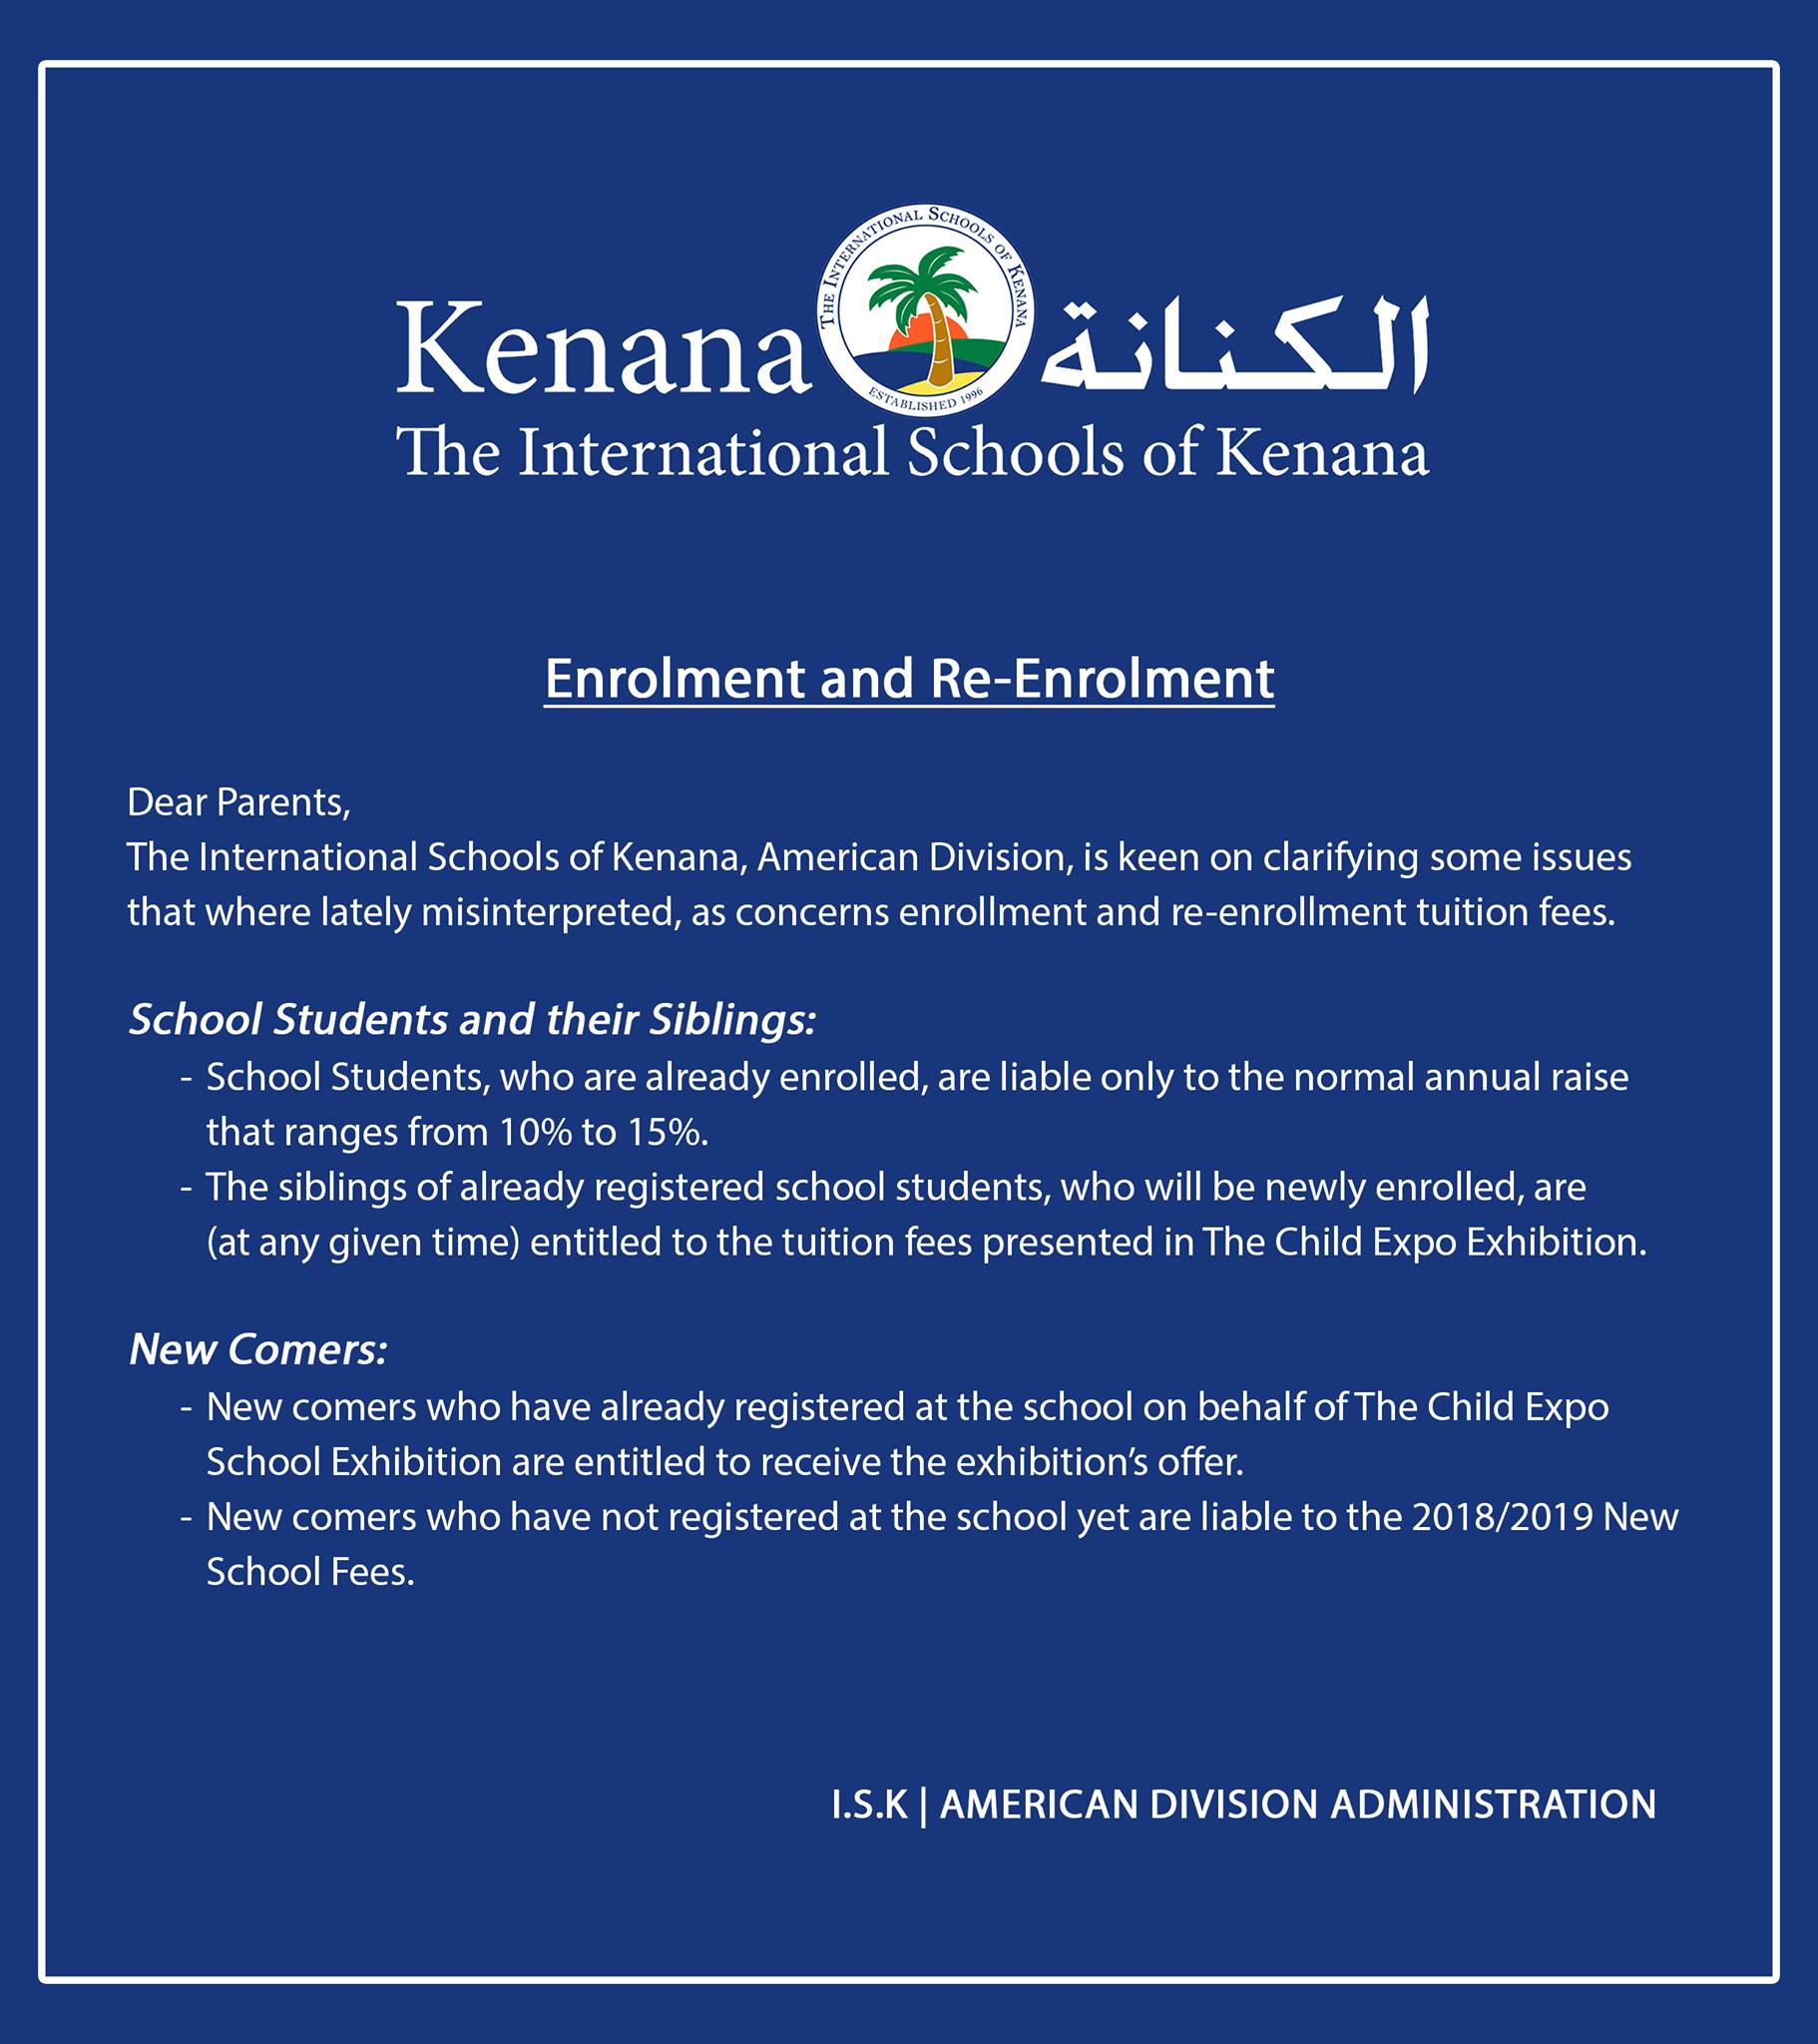 International schools of kenana | American Division - Enrollment and Re-Enrollment